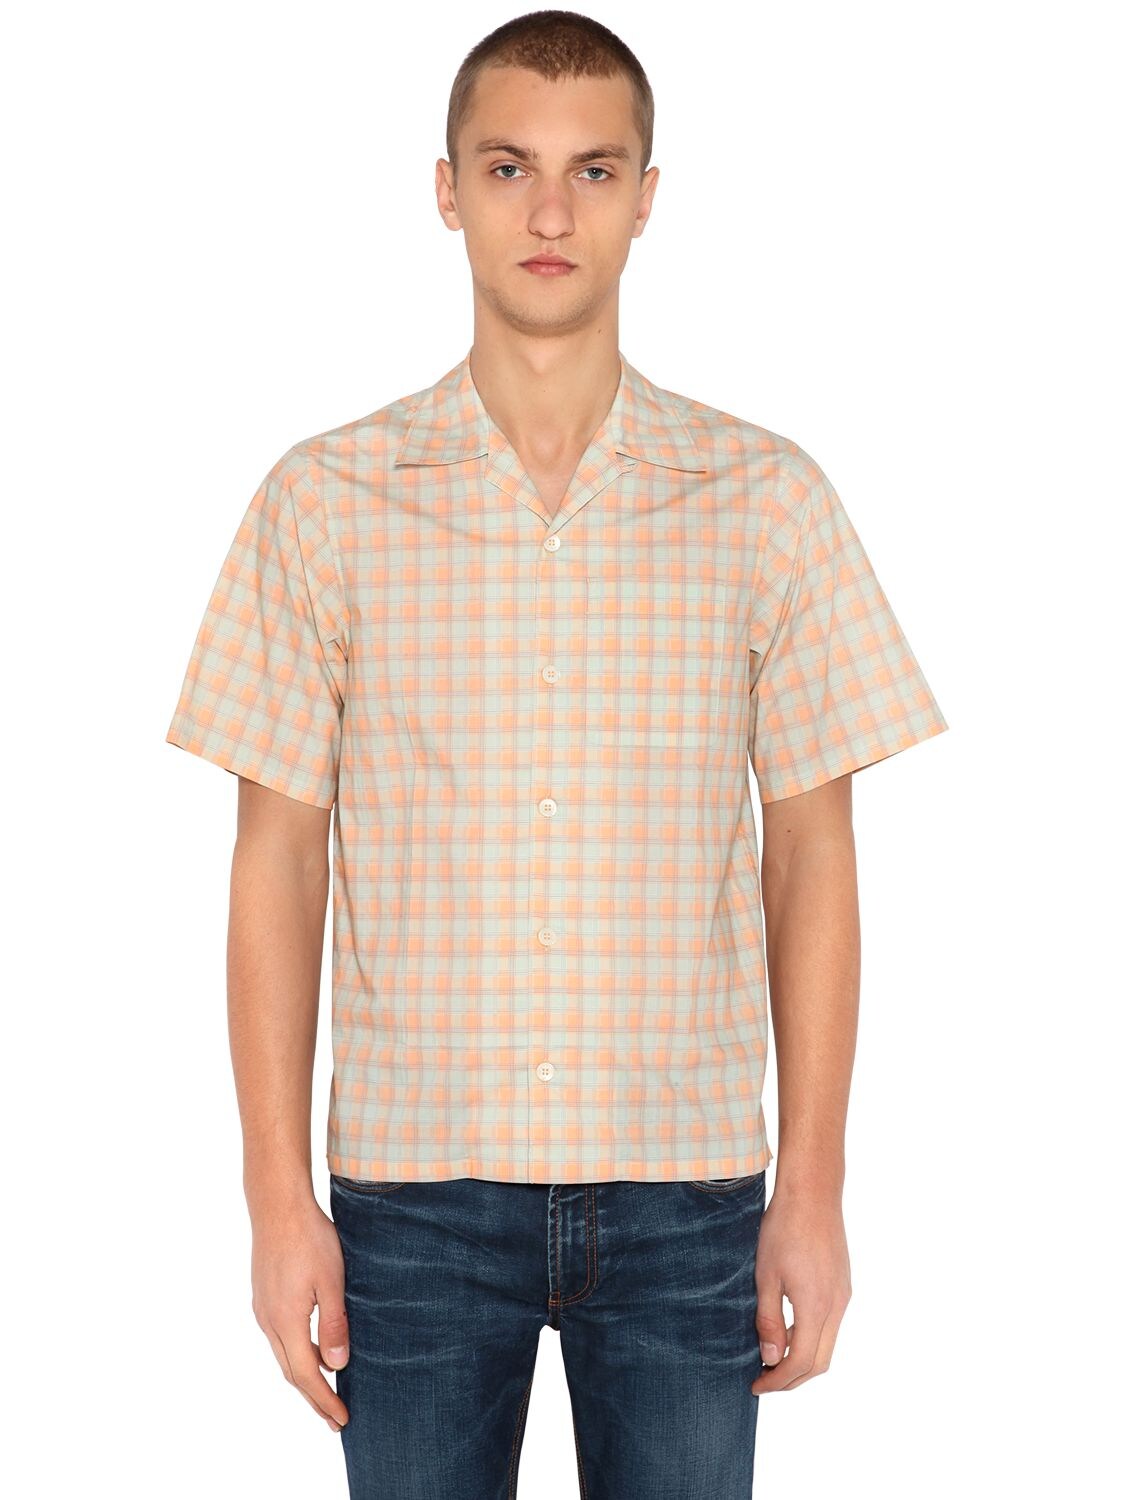 Prada Plaid Short Sleeve Cotton Bowling Shirt In Orange/beige